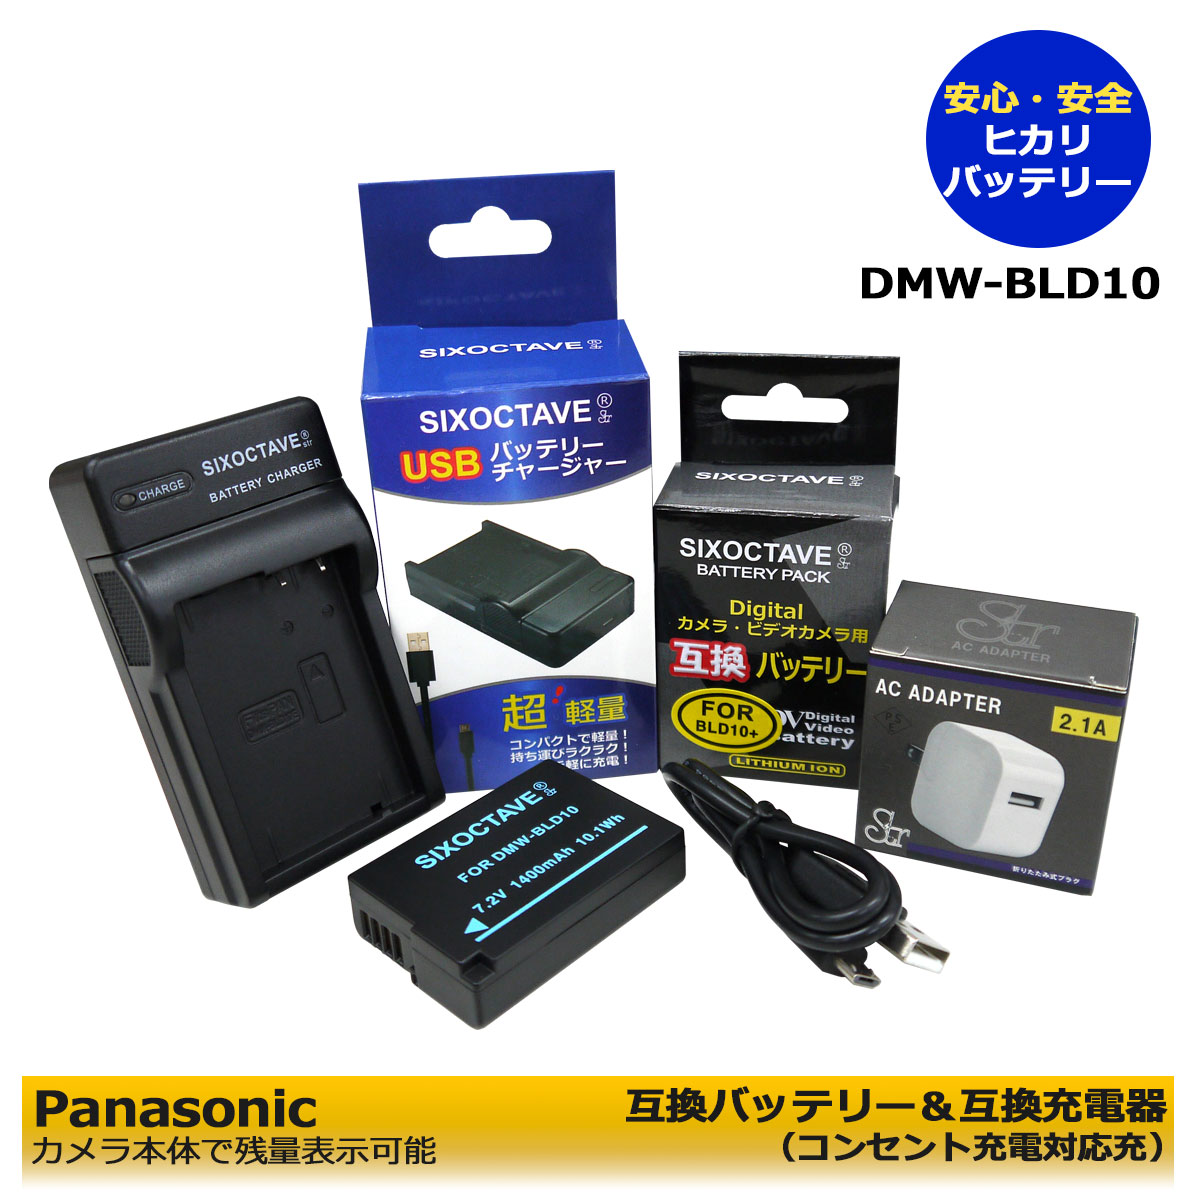 DMW-BLD10 商品内容 互換バッテリー　1個 互換充電器（USB充電式）　1個 コンセント充電用　ACアダプター　1個 規格 【バッテリー】 形式：リチウムイオン 電圧：7.2V 容量：1400mAh 大きさ：約H:5cm/W:3.6cm/D:1.3cm 重量: 約50g 【充電器】 入力：micro USB DC5V±5% 出力：DC 4.2V±5% 500mA 対応機種 （LUMIX ）ルミックス デジタル一眼カメラ DMC-GX1 DMC-GX1-S DMC-GX1-K MC-GX1X DMC-GX1X-K DMC-GX1X-S DMC-GX1W DMC-GX1W-S DMC-GX1W-K DMC-G3 DMC-G3-W DMC-G3-K DMC-G3W DMC-G3W-T DMC-G3W-K DMC-G3W-W DMC-G3K DMC-G3K-K DMC-GF2 DMC-GF2-K DMC-GF2C DMC-GF2C-R DMC-GF2C-K DMC-GF2C-W DMC-GF2W DMC-GF2W-K DMC-GF2W-R DMC-GF2W-W 互換バッテリー：DMW-BLD10 対応充電器：DMW-BTC7 / DMW-BLD10 仕様 【バッテリー】 ●純正品＆互換品の充電器でも充電可能。 ●残量表示可能。 ●認証：PSEマーク（電気用品安全法）取得製品。 ●CEマーク（欧州連合安全規制）取得製品。 【充電器】 ●純正＆互換バッテリーも充電可能！ ●CEマーク（欧州連合安全規制）製品。 ●赤ランプ【充電中】/青ランプ【充電完了】 ●USB端子がある機器に接続し、どこでも充電可能。 ●軽量で携帯に大変便利。 ●コンセント充電用ACアダプター付き。 ☆本製品には過電流保護、過充電防止、過放電防止の保護回路が内蔵。 保証：6ヶ月（PL保険（生産物賠償責任保険）加入済み。 ご購入日より6ヶ月の安心保証付き！ 届出事業者名：SIXOCTAVE PSマークの種類：PSE